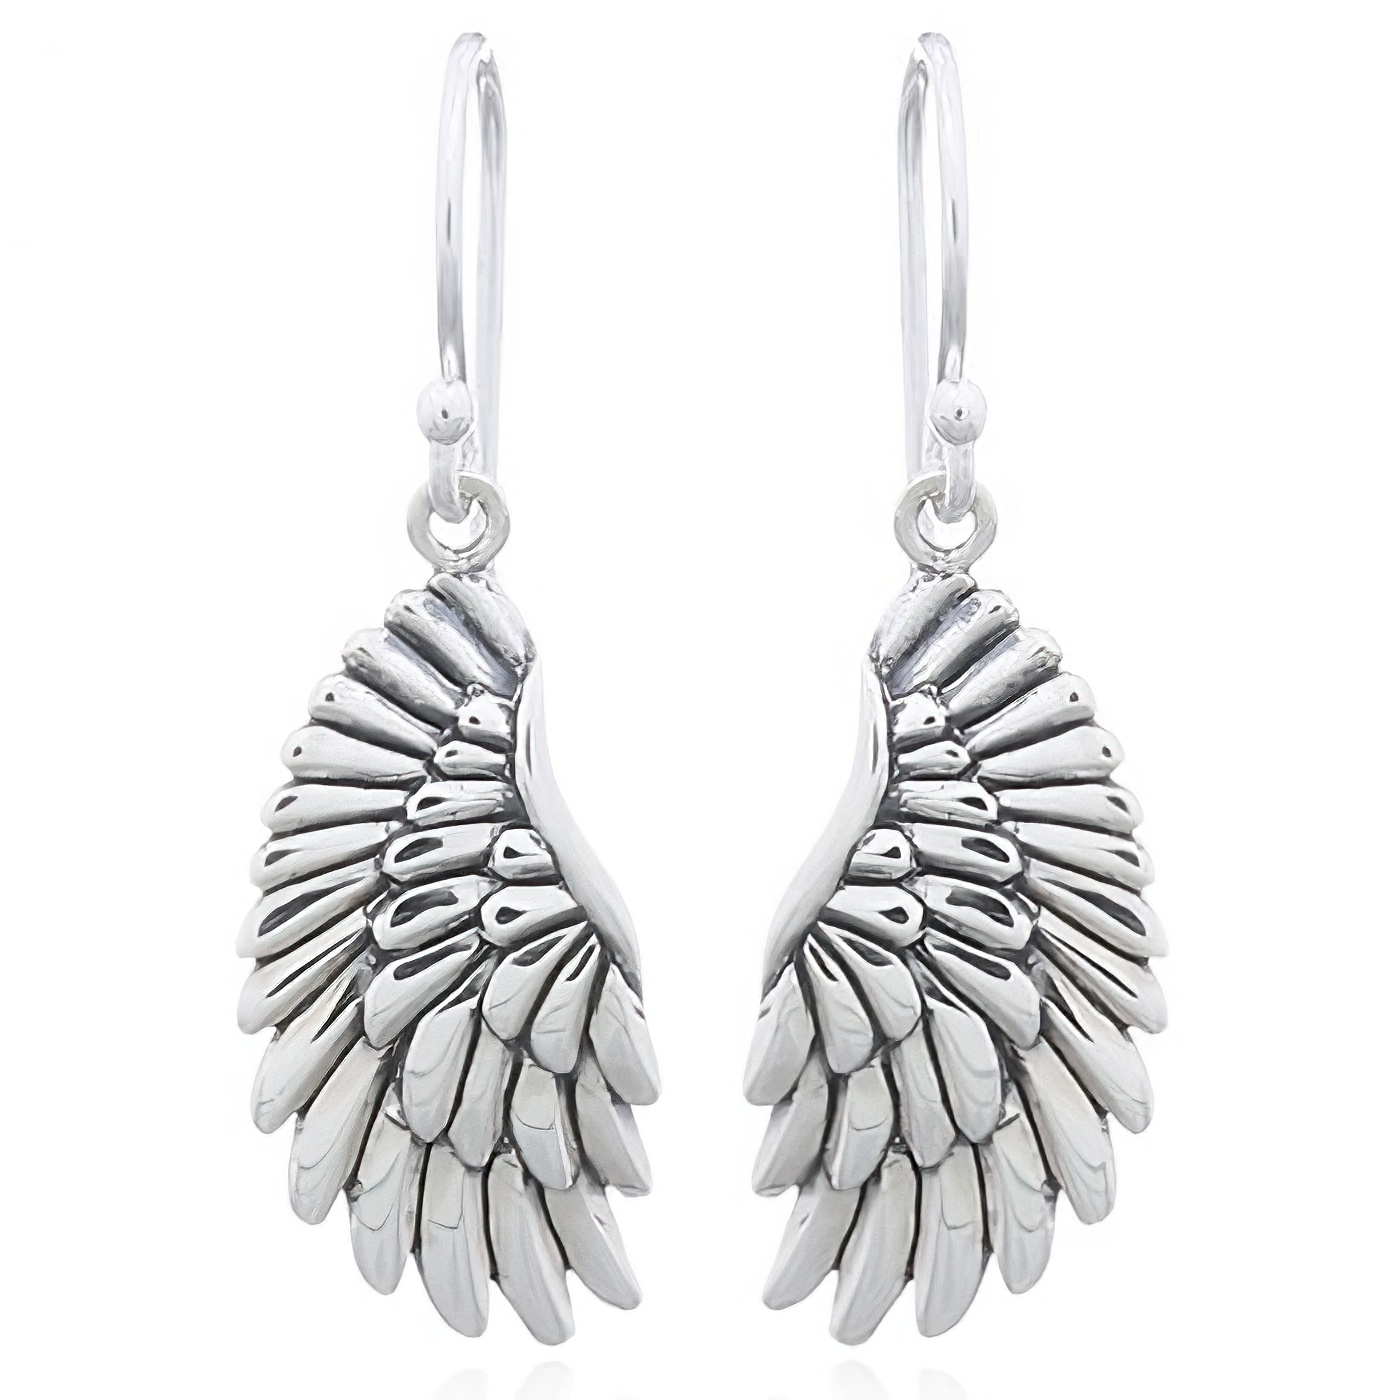 Wings Of Cupid In Sterling Silver Dangle Earrings by BeYindi 